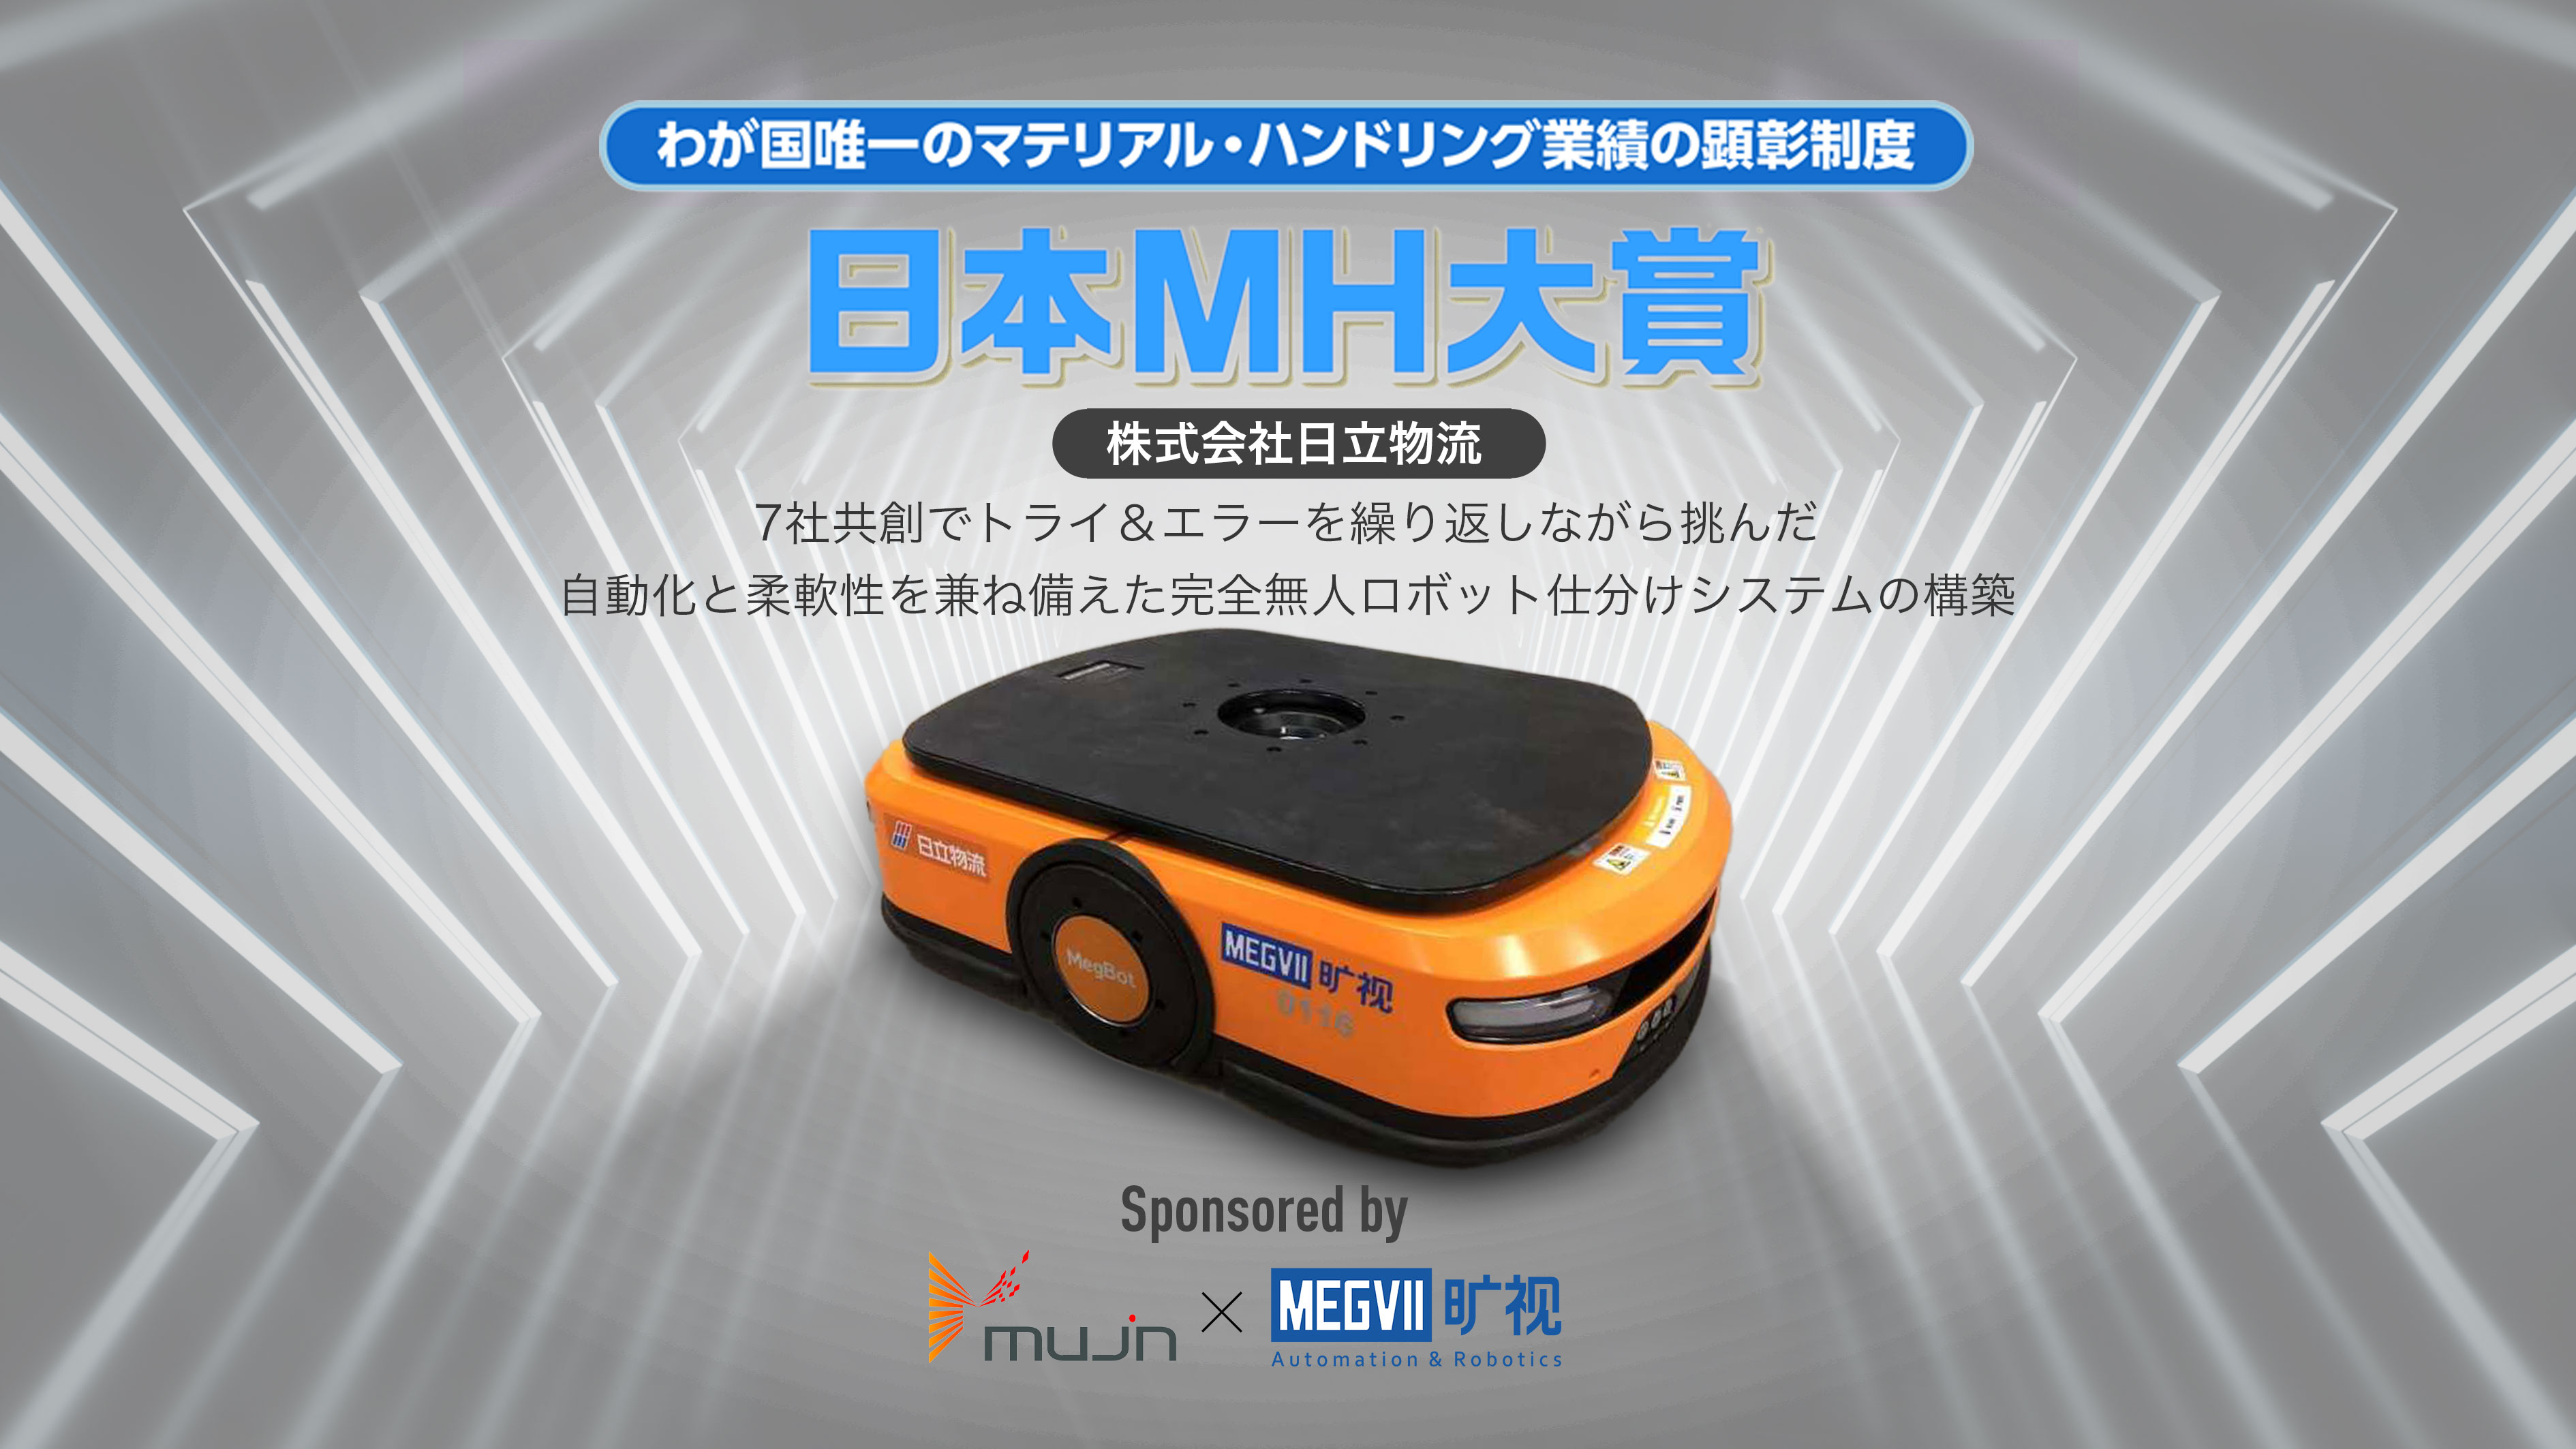 Cheerful news！！！！Megvii Hitachi Logistics Solution won Japan MH Award!